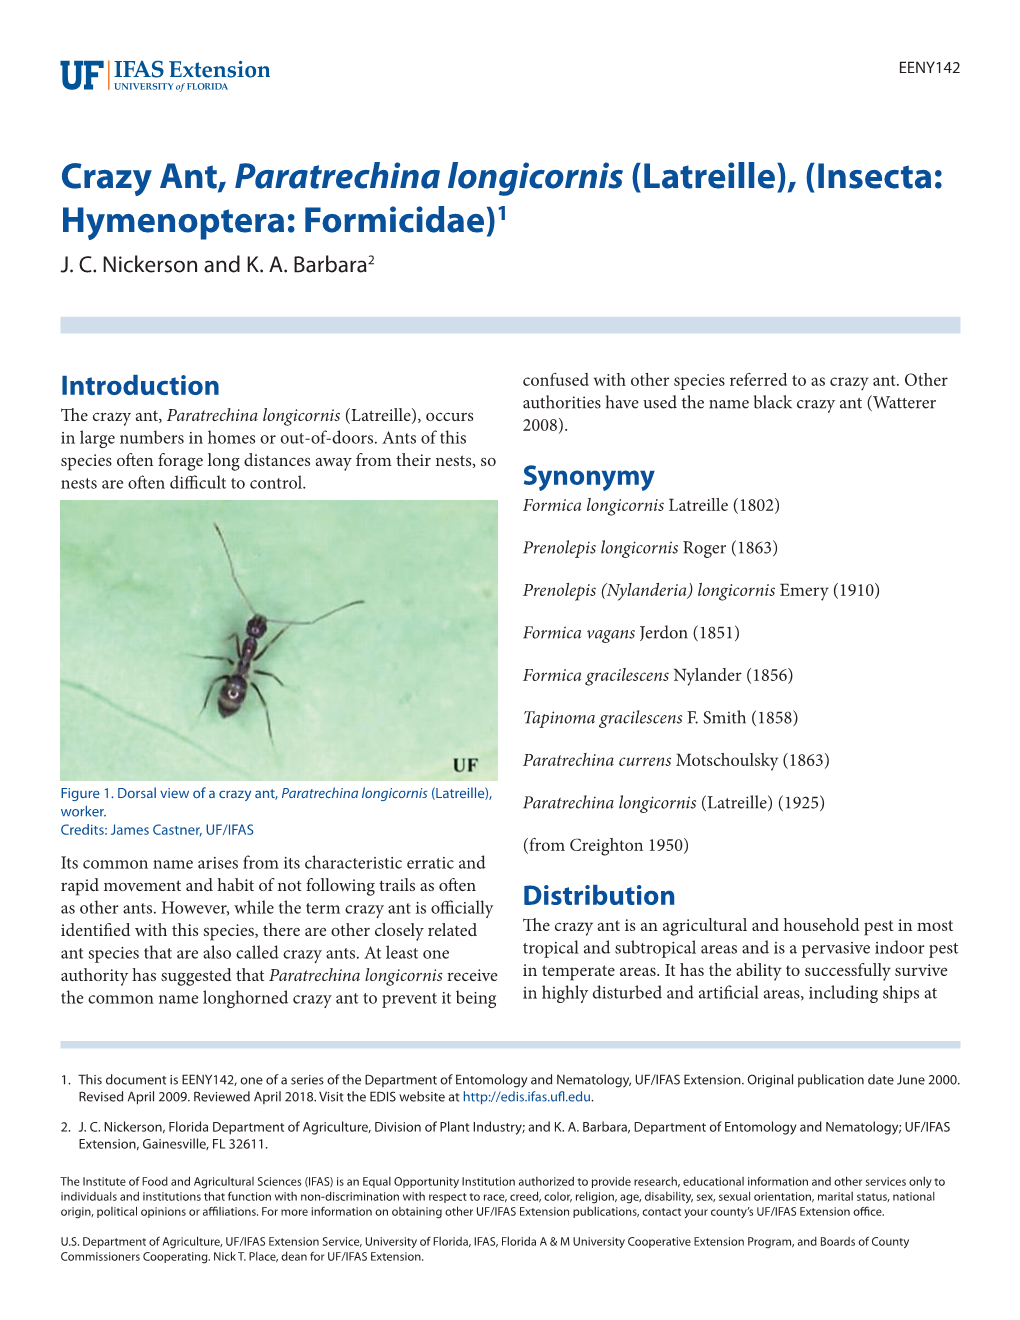 Crazy Ant, Paratrechina Longicornis (Latreille), (Insecta: Hymenoptera: Formicidae)1 J